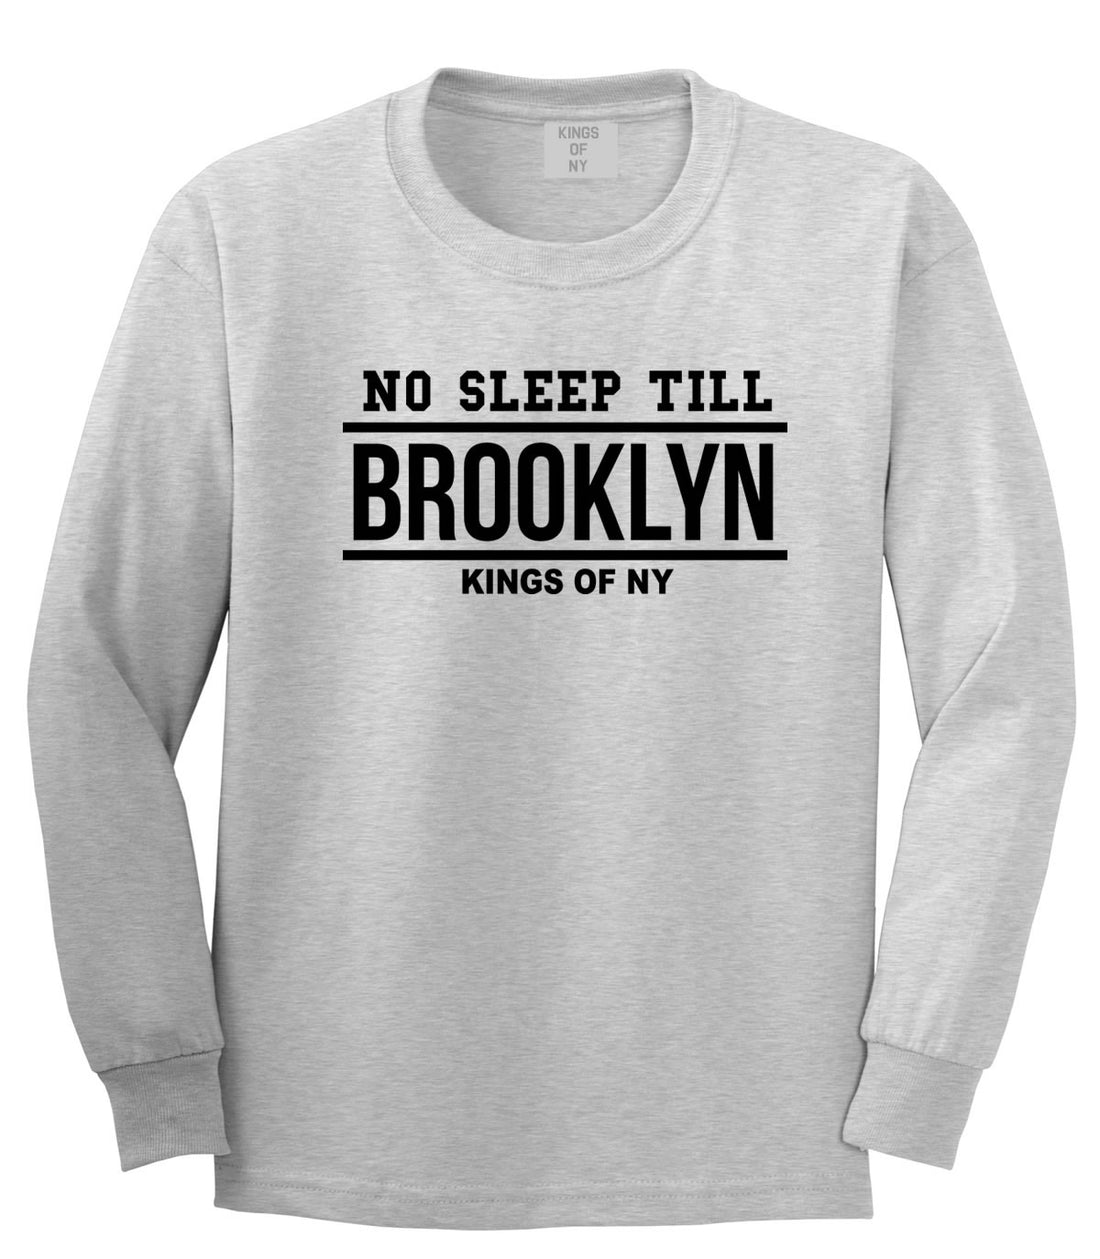 No Sleep Till Brooklyn Long Sleeve T-Shirt in Grey by Kings Of NY